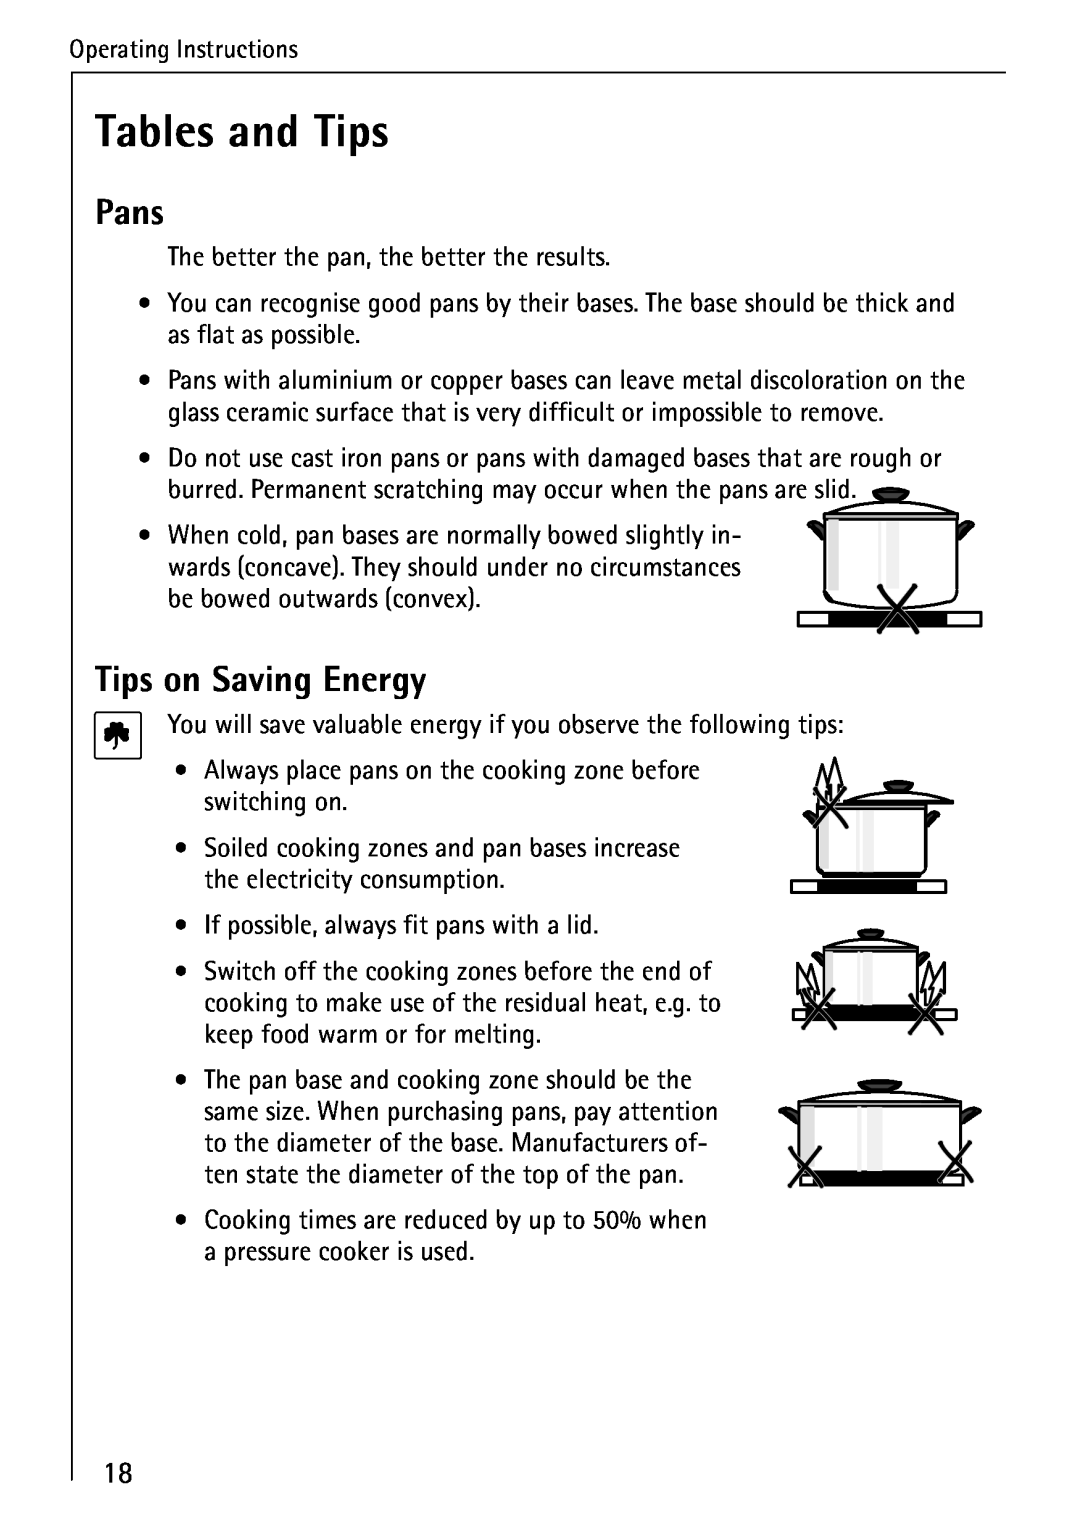 AEG 95300KA-MN operating instructions Tables and Tips, Pans, Tips on Saving Energy 